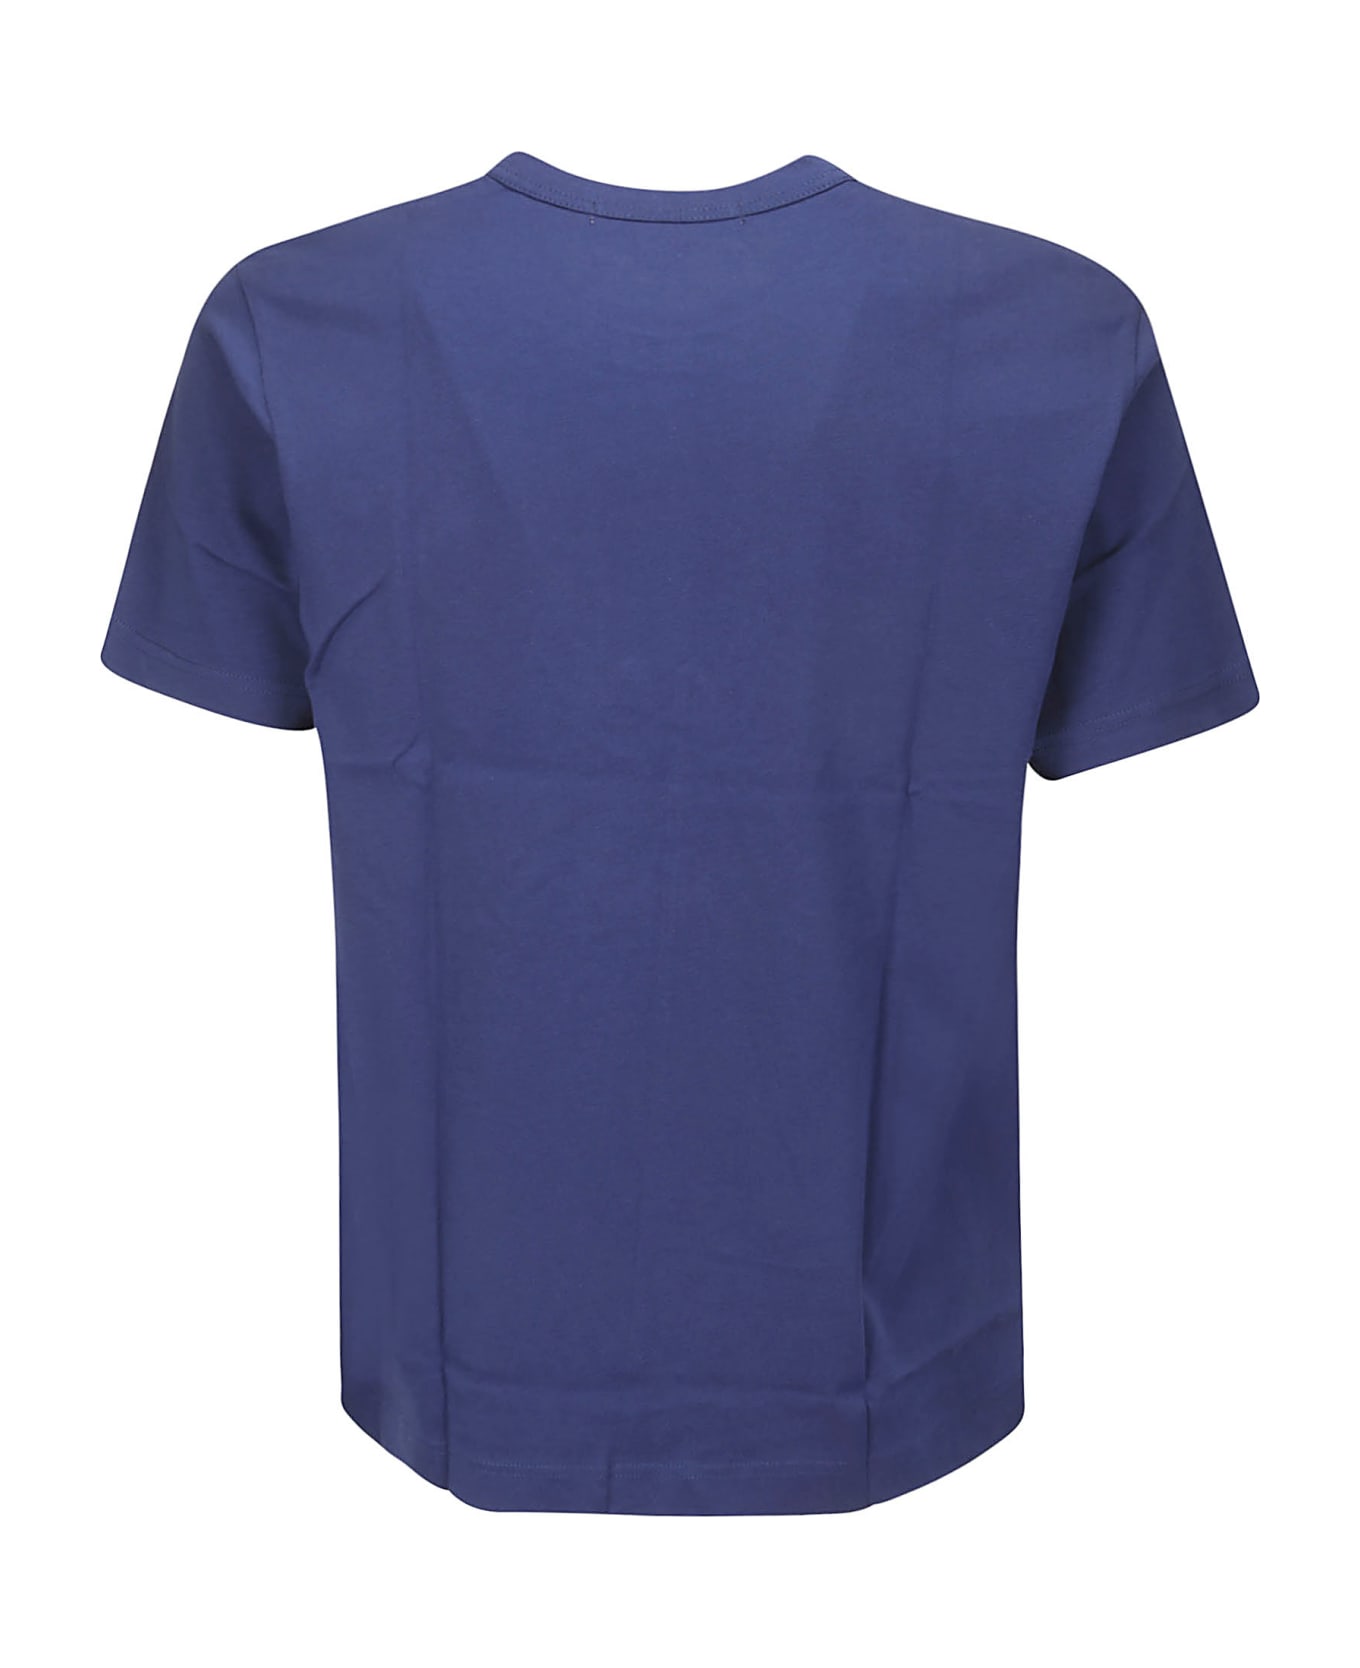 Comme des Garçons Shirt Cotton Jersey Plain With Printed Cdg Shirt L - NAVY